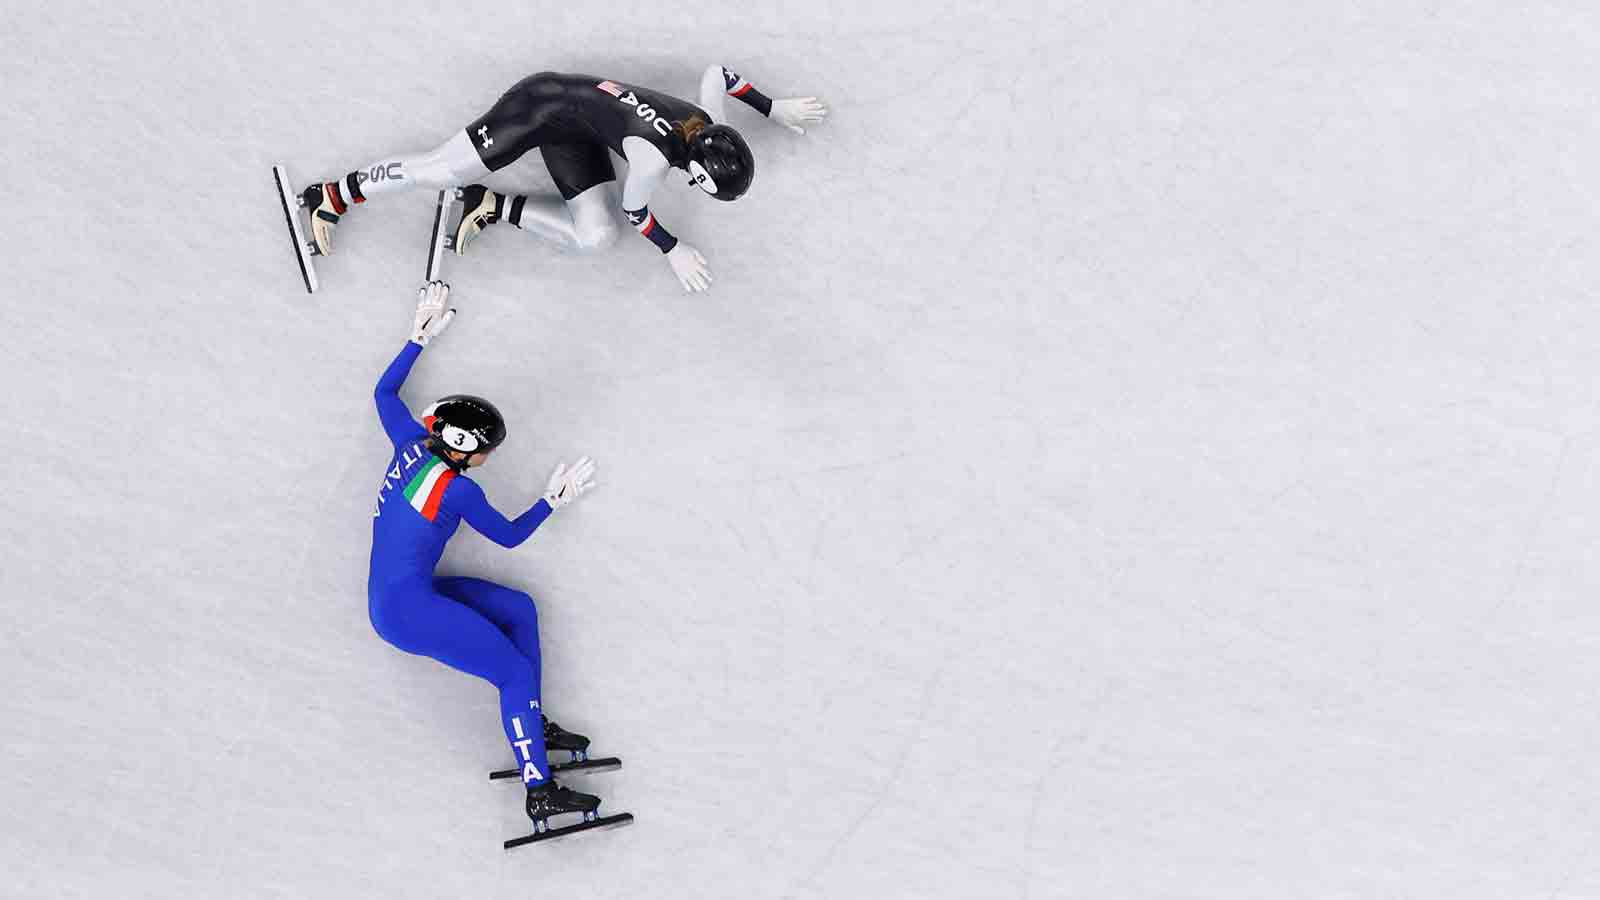 U.S. Speed Skater Kristen Santos Denied Medal After Late Crash in Women's 1000m